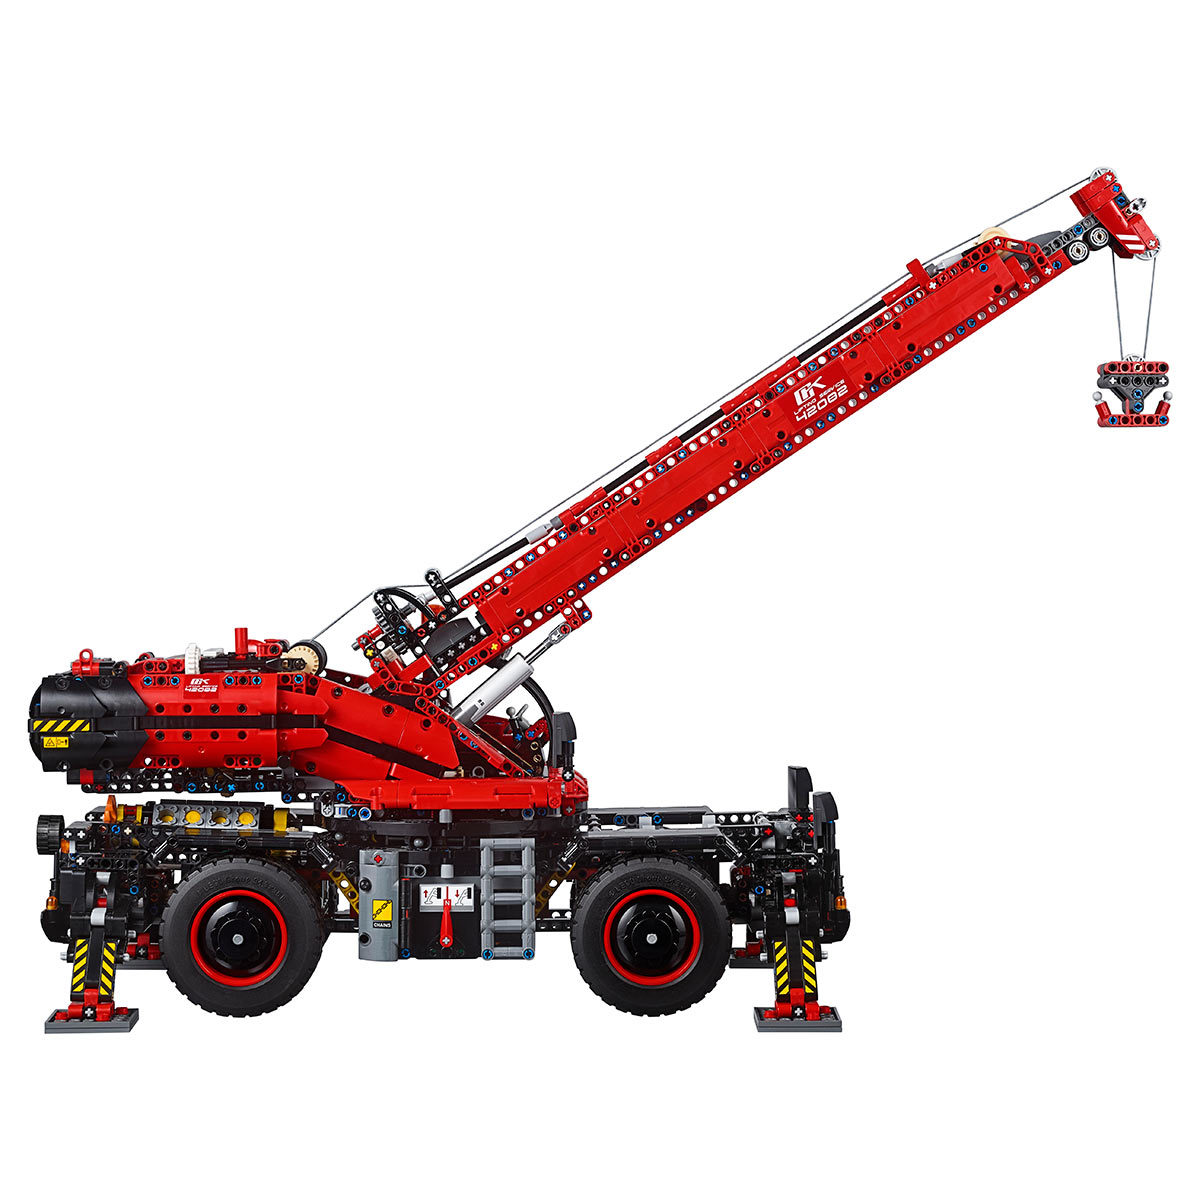 LEGO Technic Rough Terrain Crane + Power Functions - Model 42082 (11+ Years)